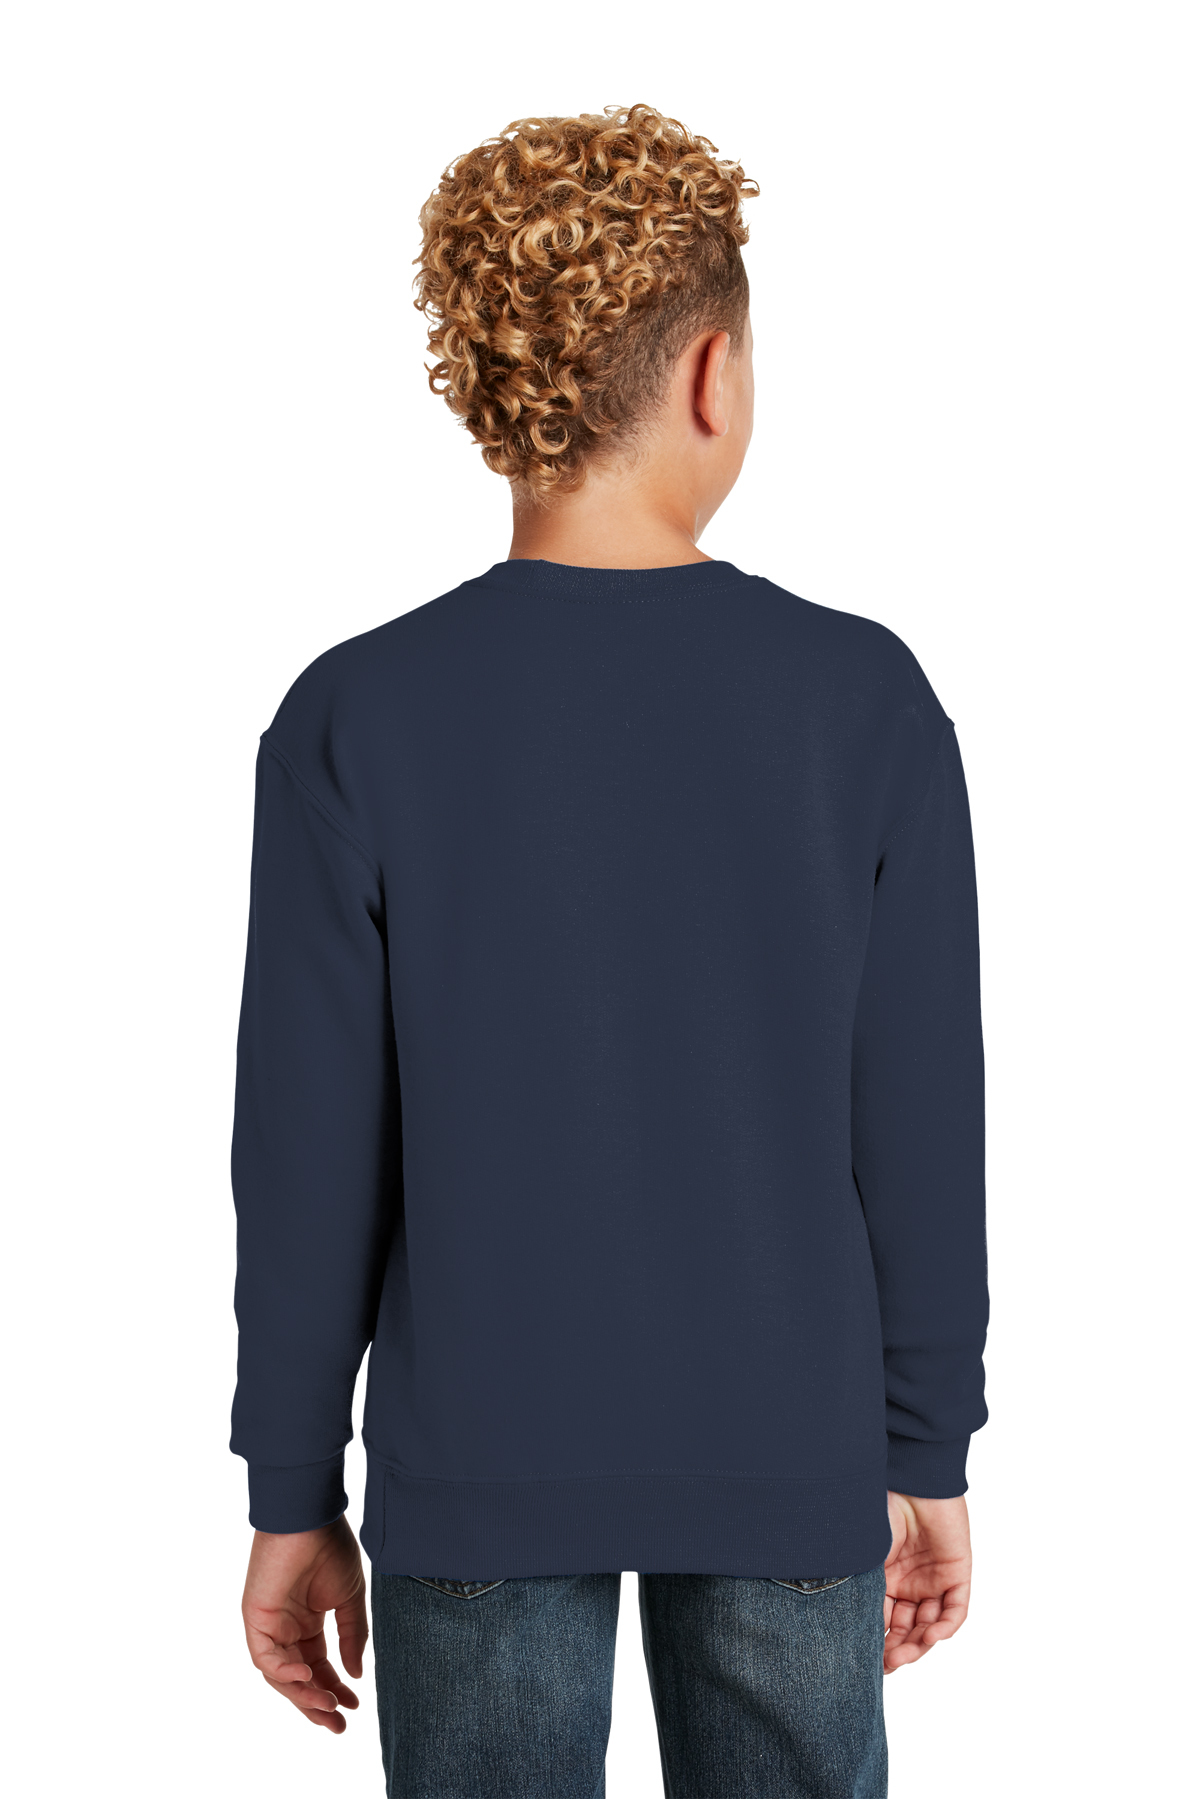 Jerzees - Youth NuBlend Crewneck Sweatshirt | Product | SanMar